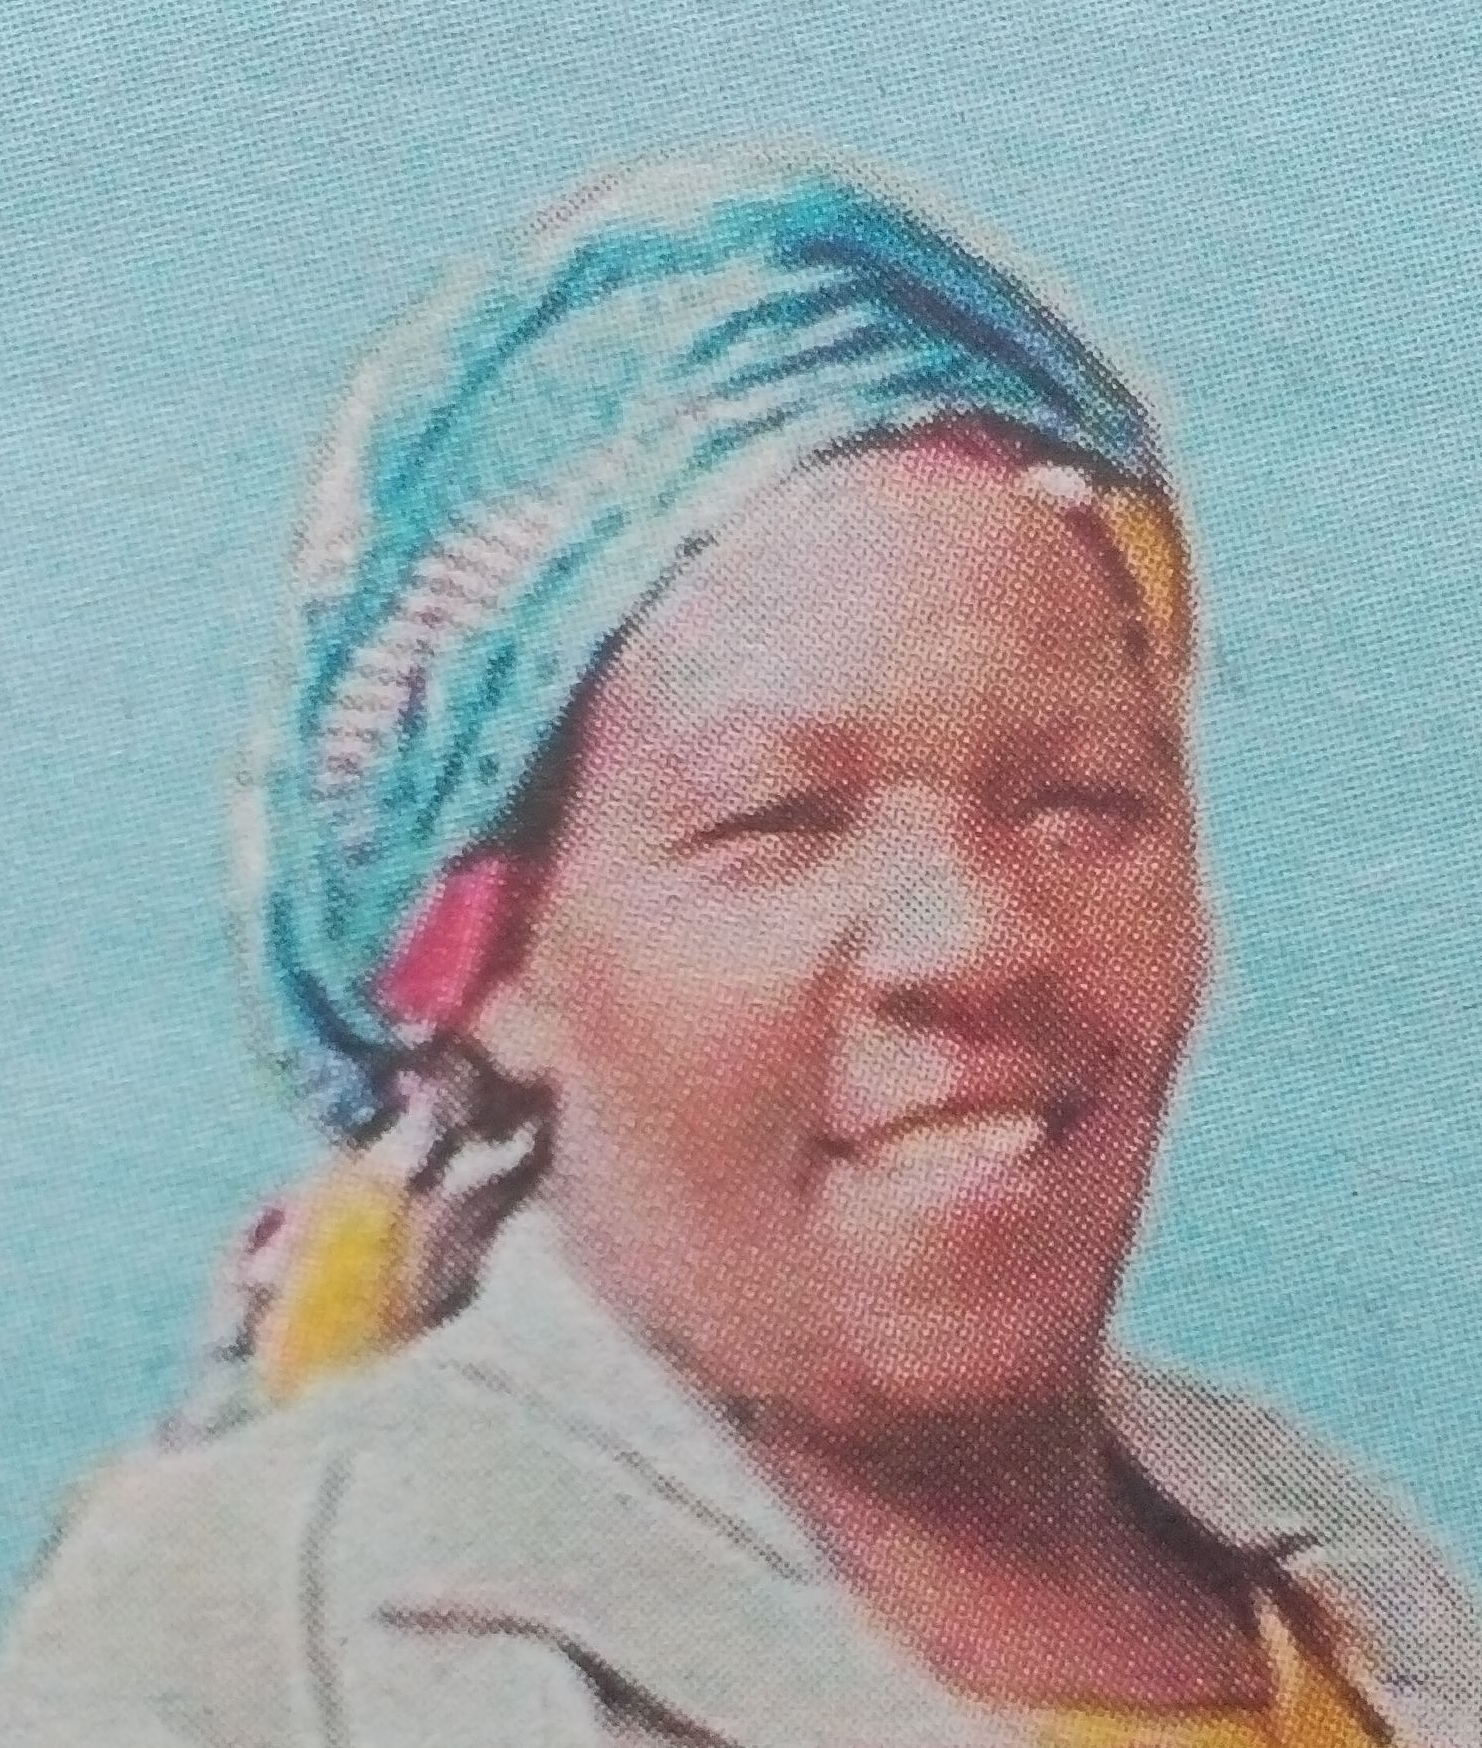 Obituary Image of Piata Masendi Mumina